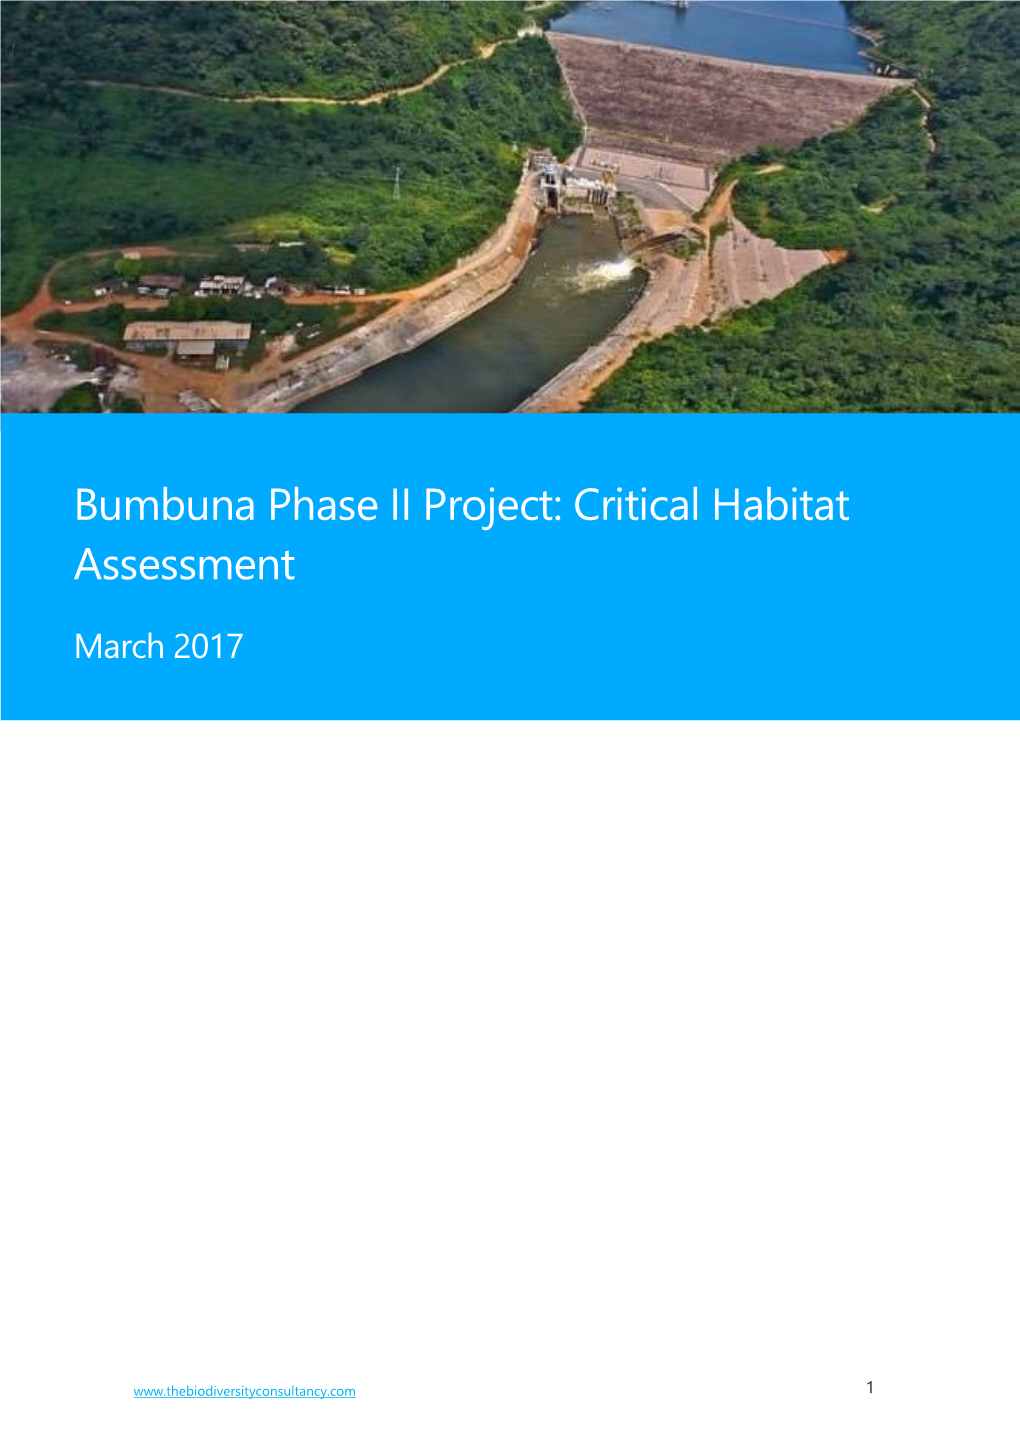 Bumbuna Phase II Project: Critical Habitat Assessment